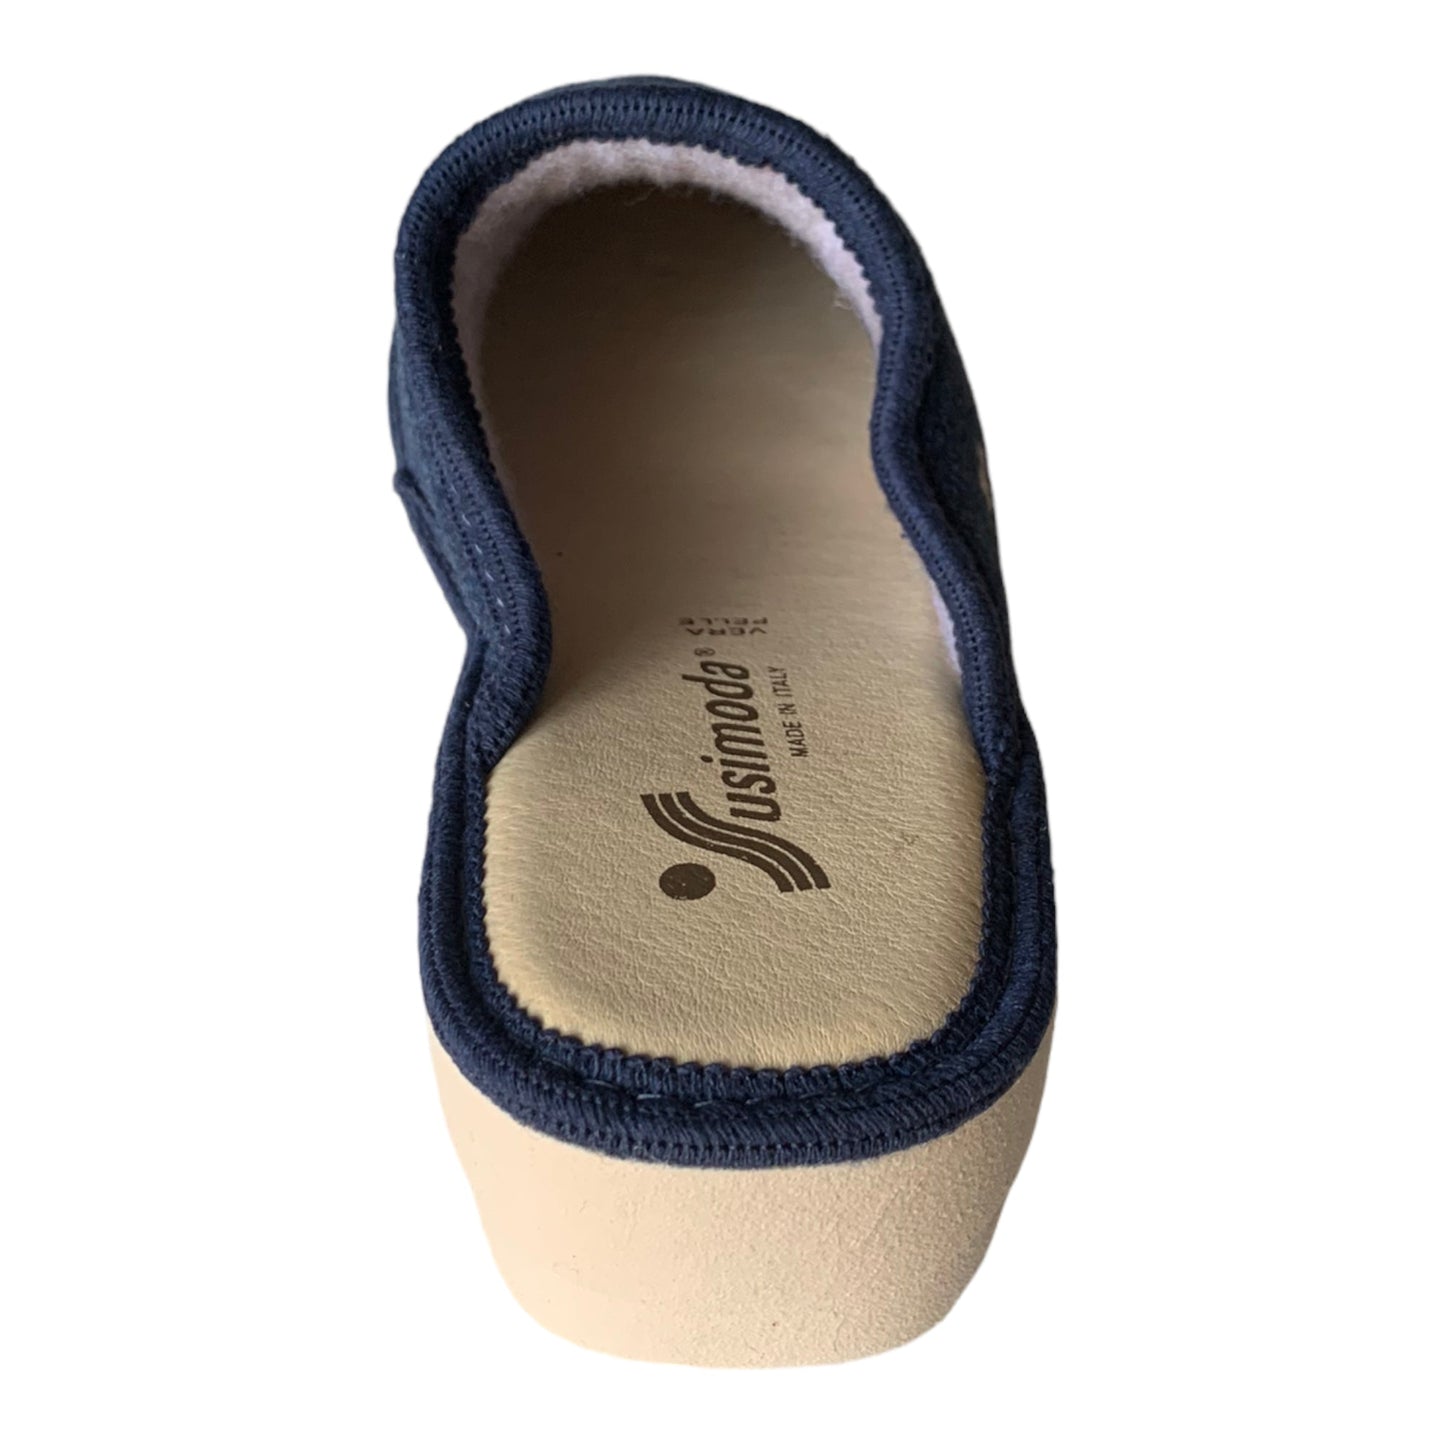 Pantofola donna Susimoda linea comfort 63390